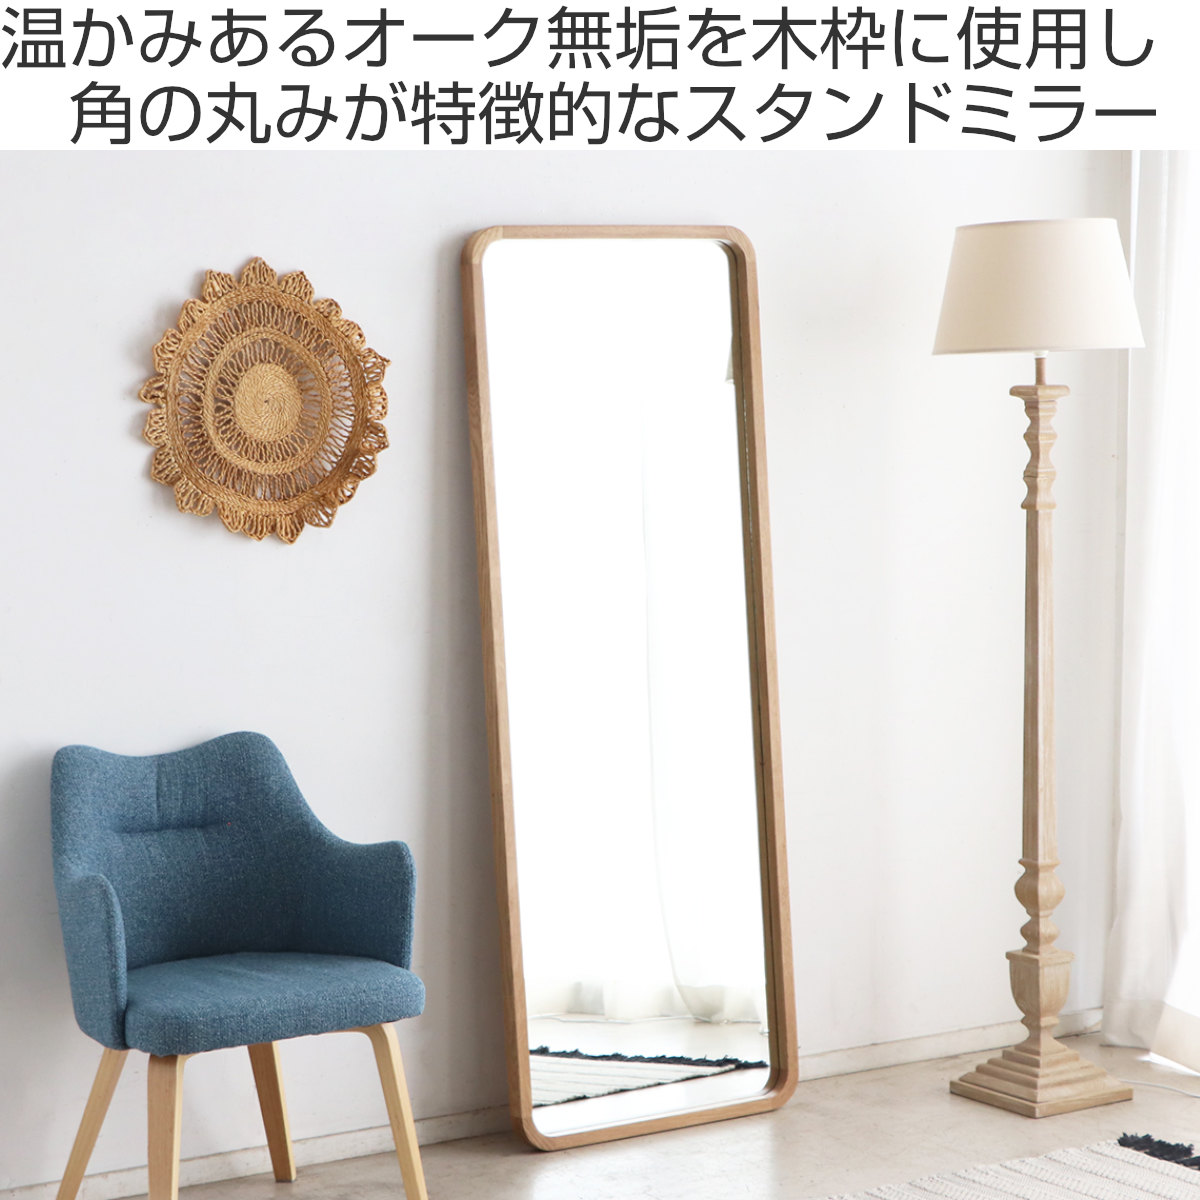 DULTON スタンドミラー 無垢 木製フレーム 壁掛けミラー 【アウトレット送料無料】 - 鏡